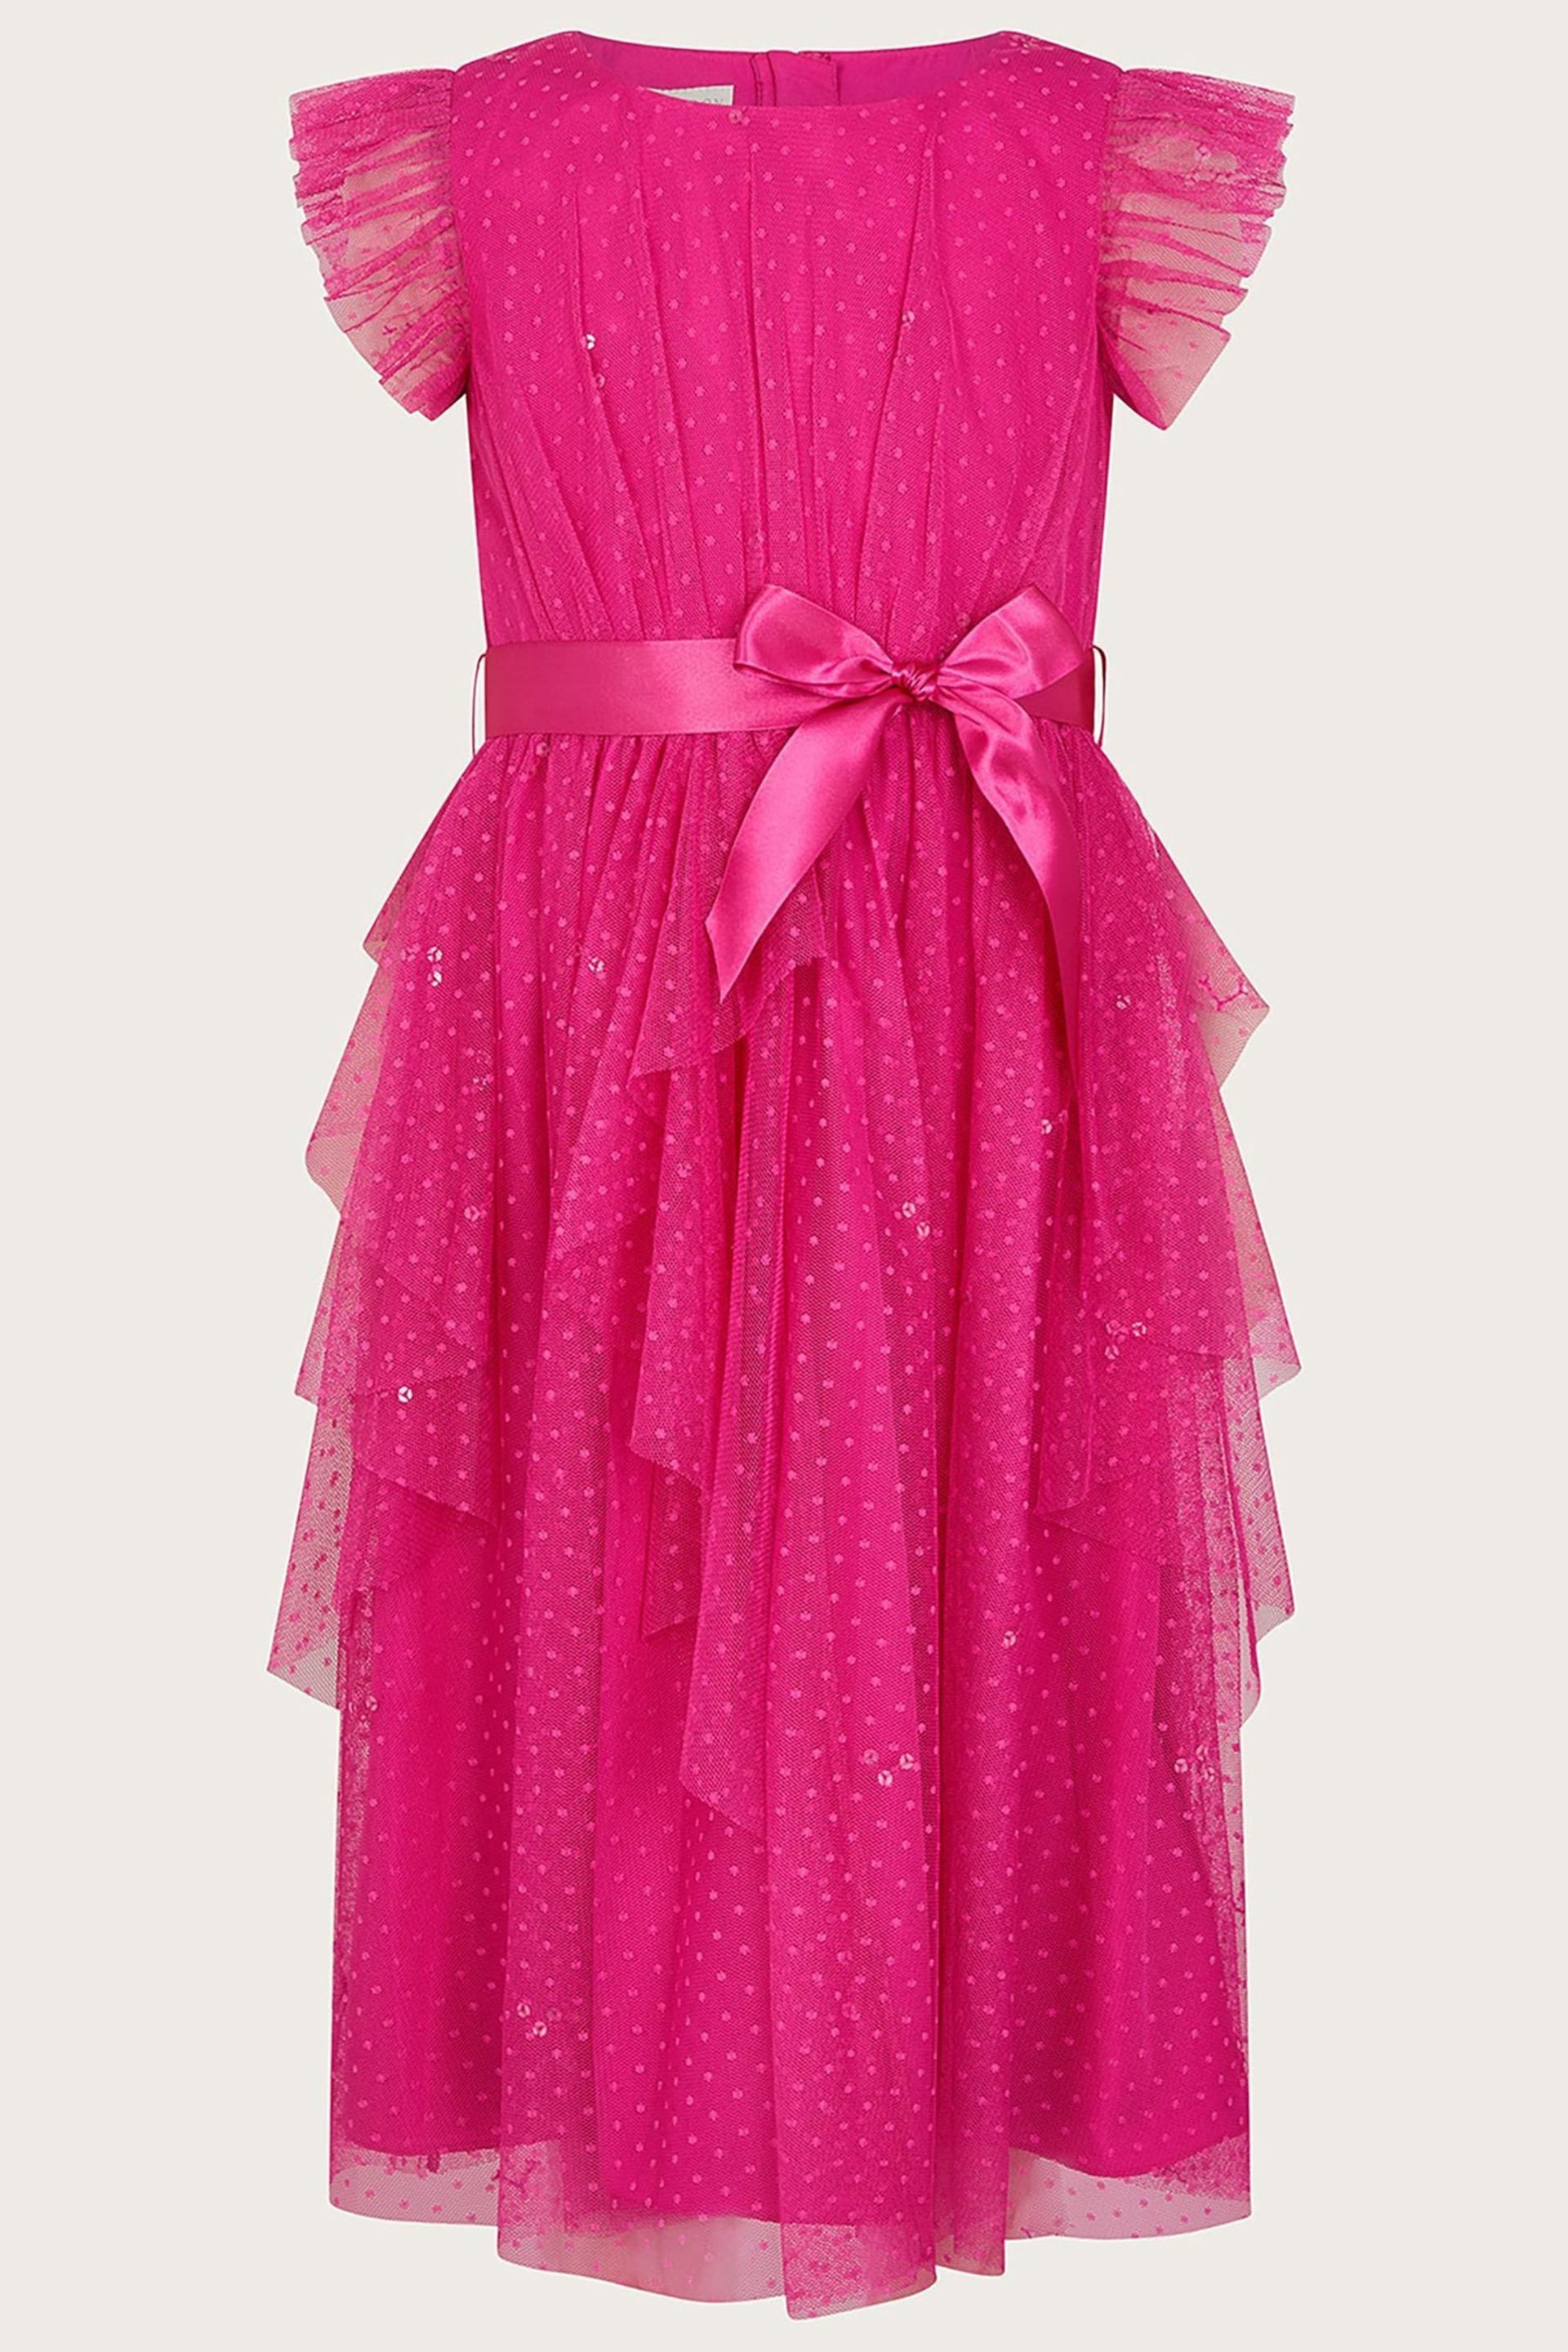 Monsoon Pink Stacie Waterfall Dress - Image 2 of 4